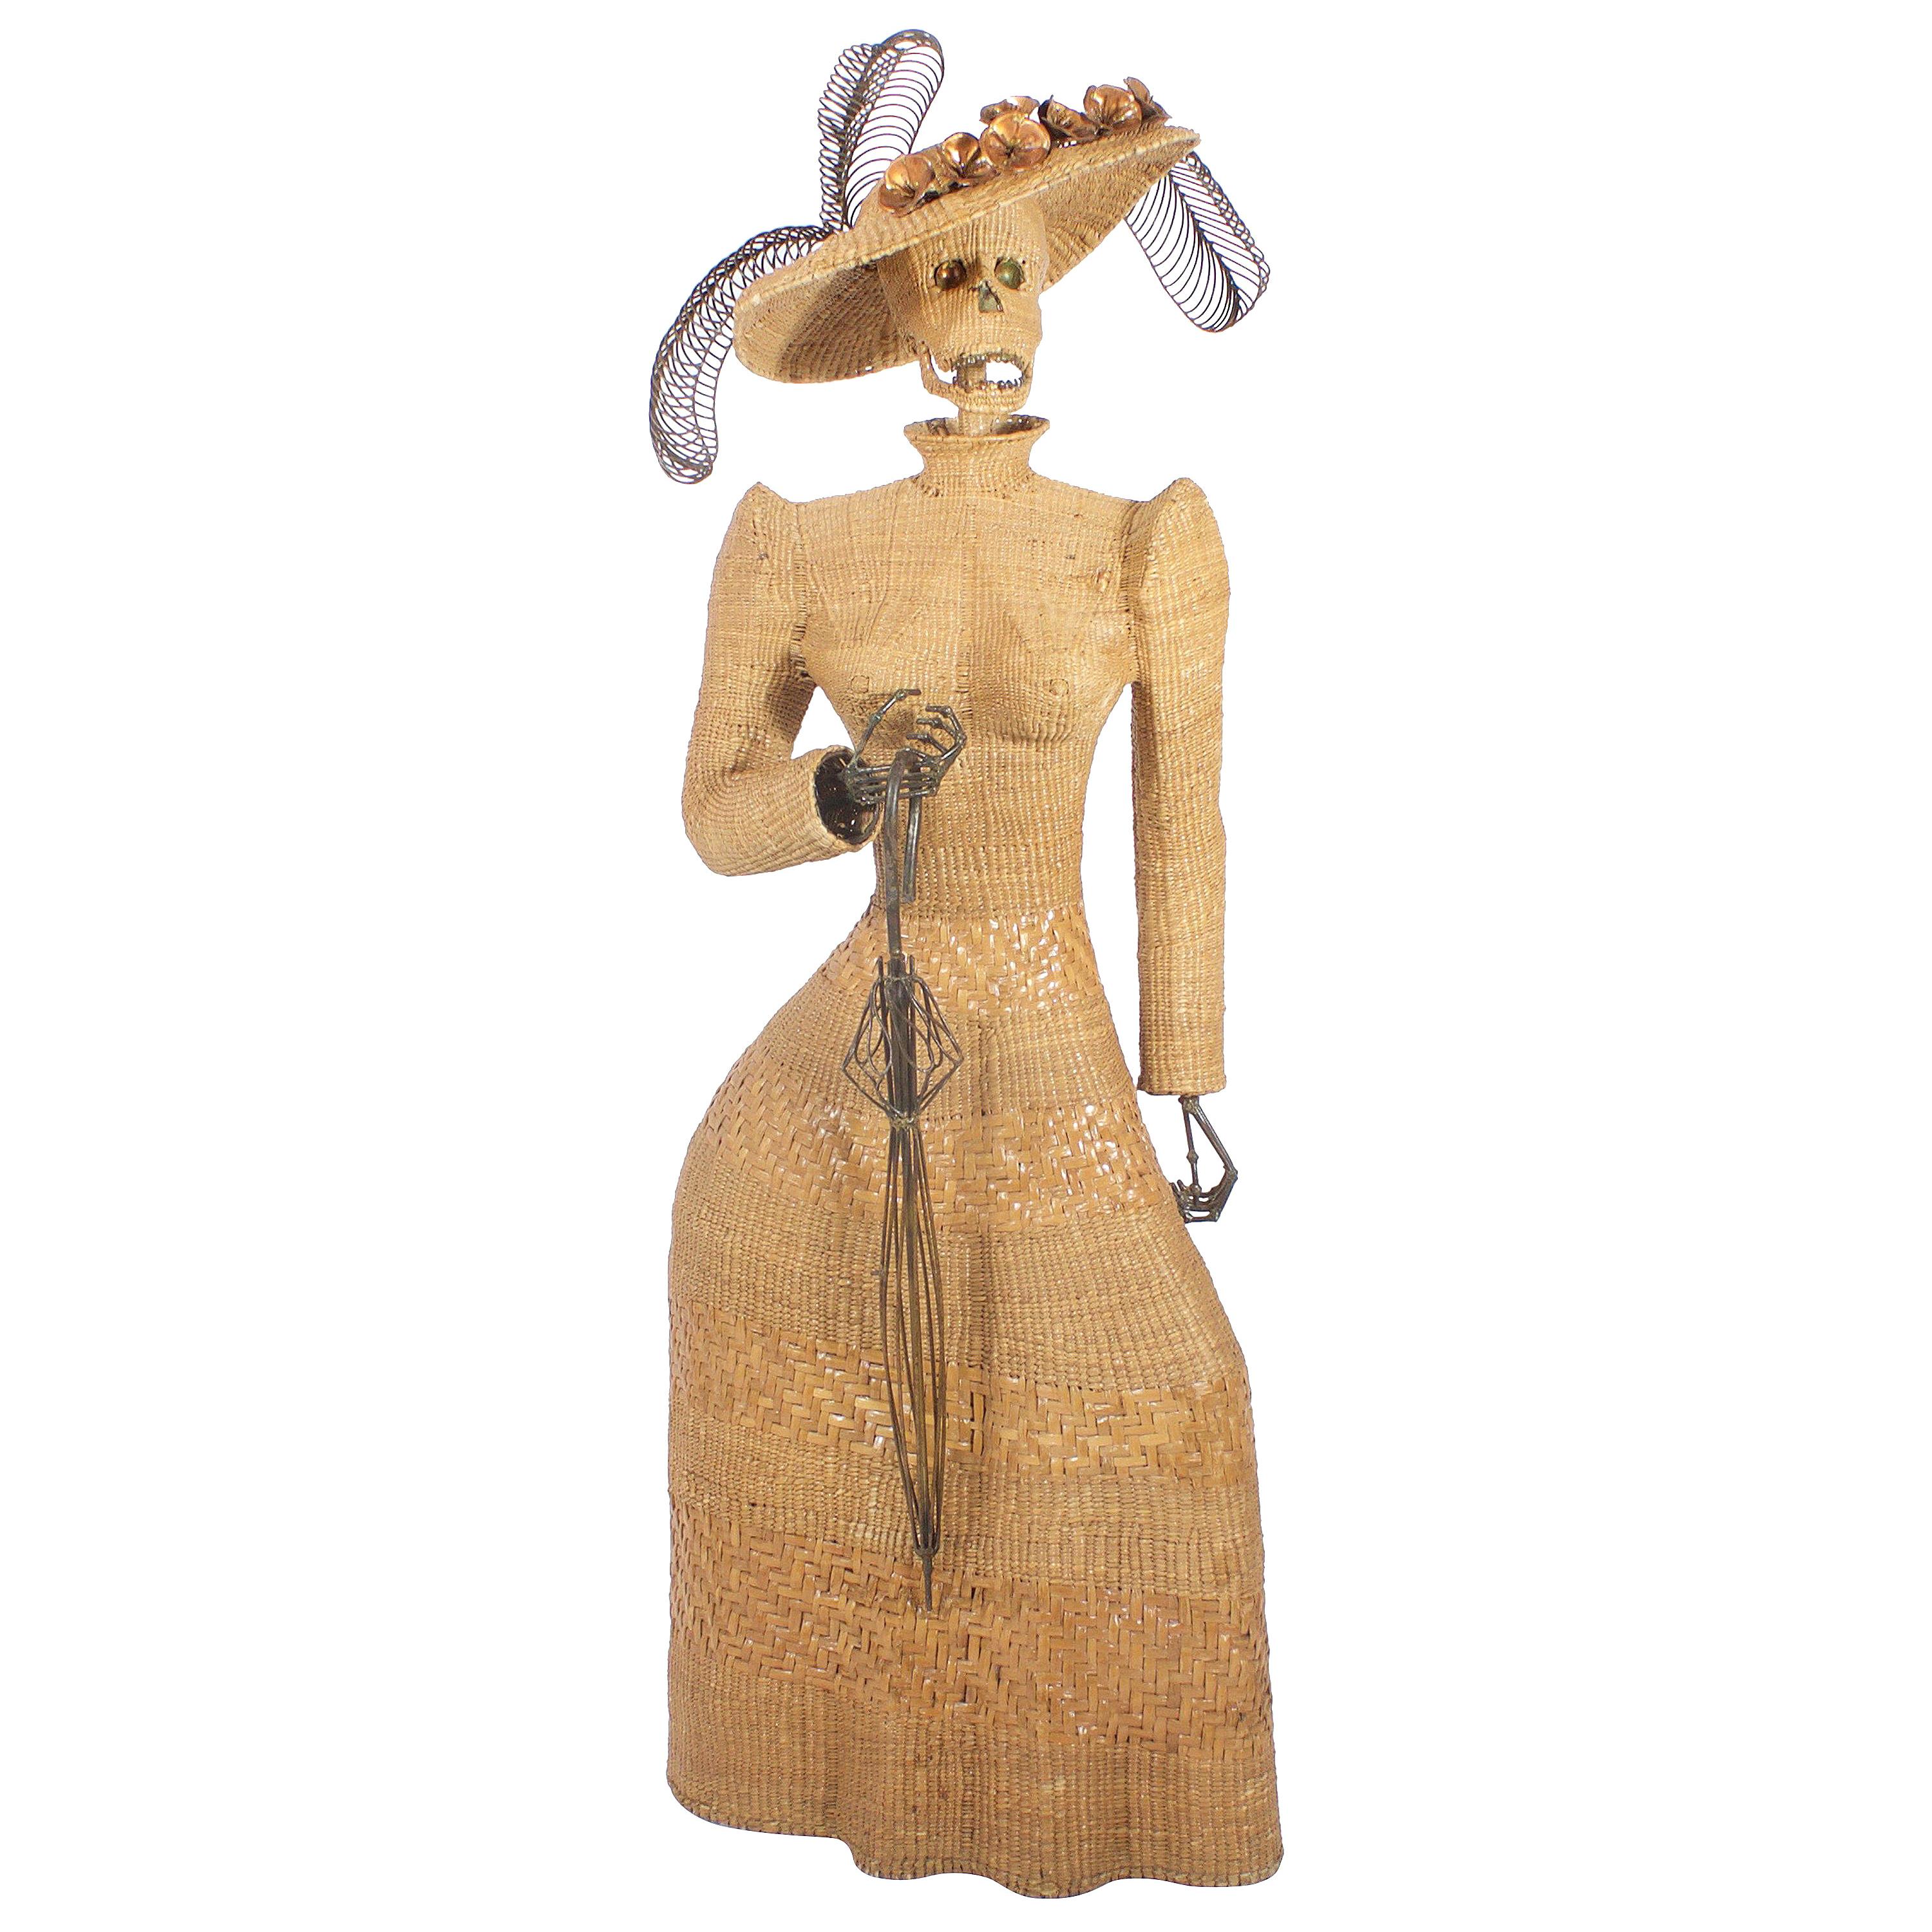 Mario Torres Wicker Sculpture of a Woman